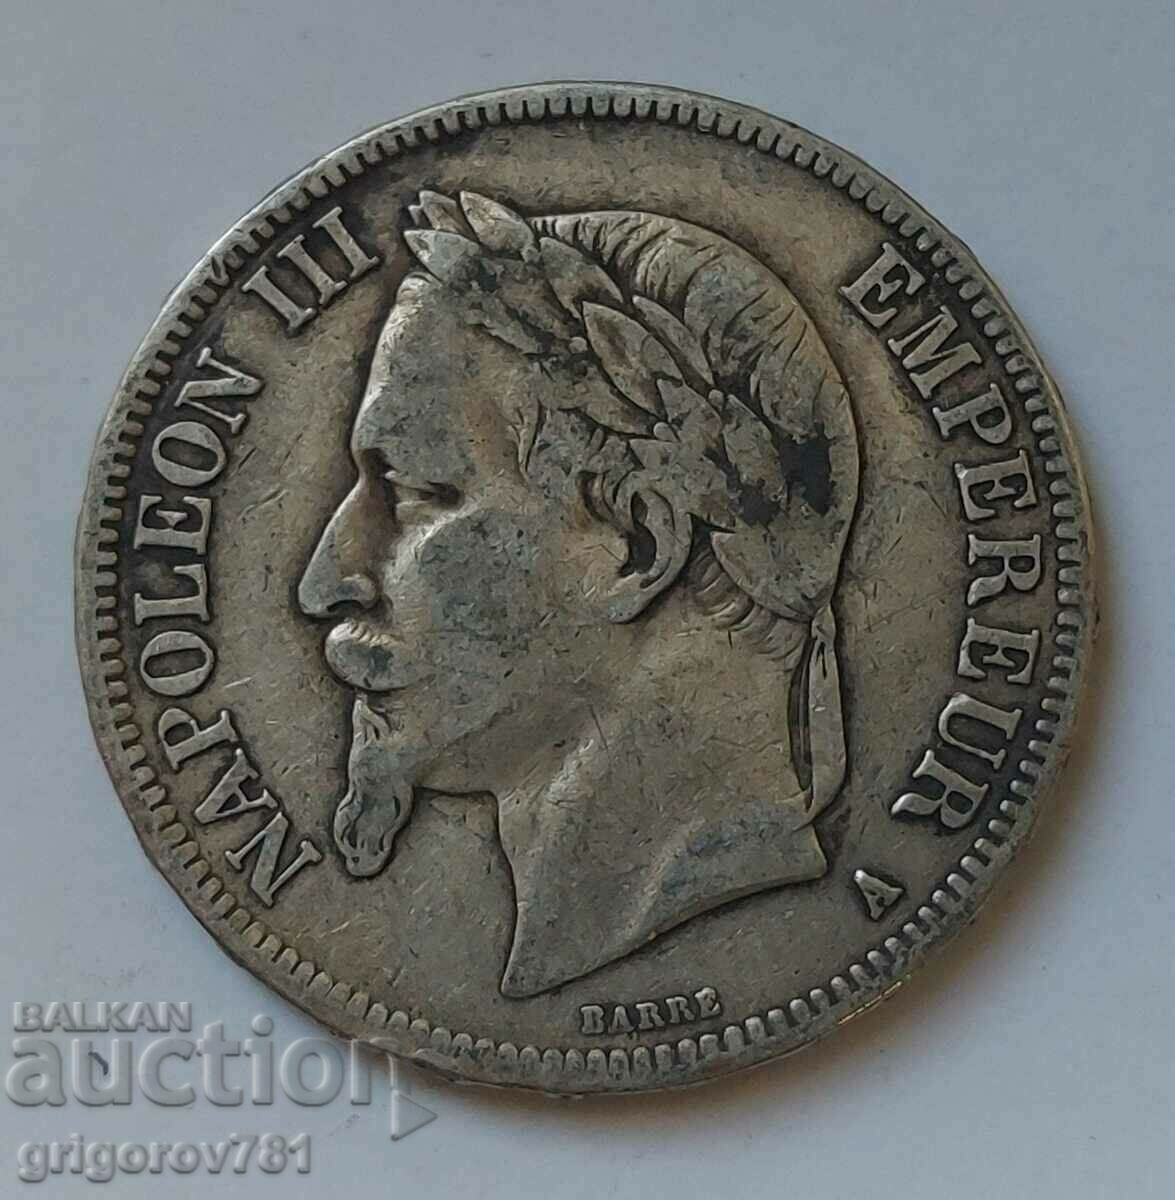 5 Francs Silver France 1868 A - Silver Coin #219